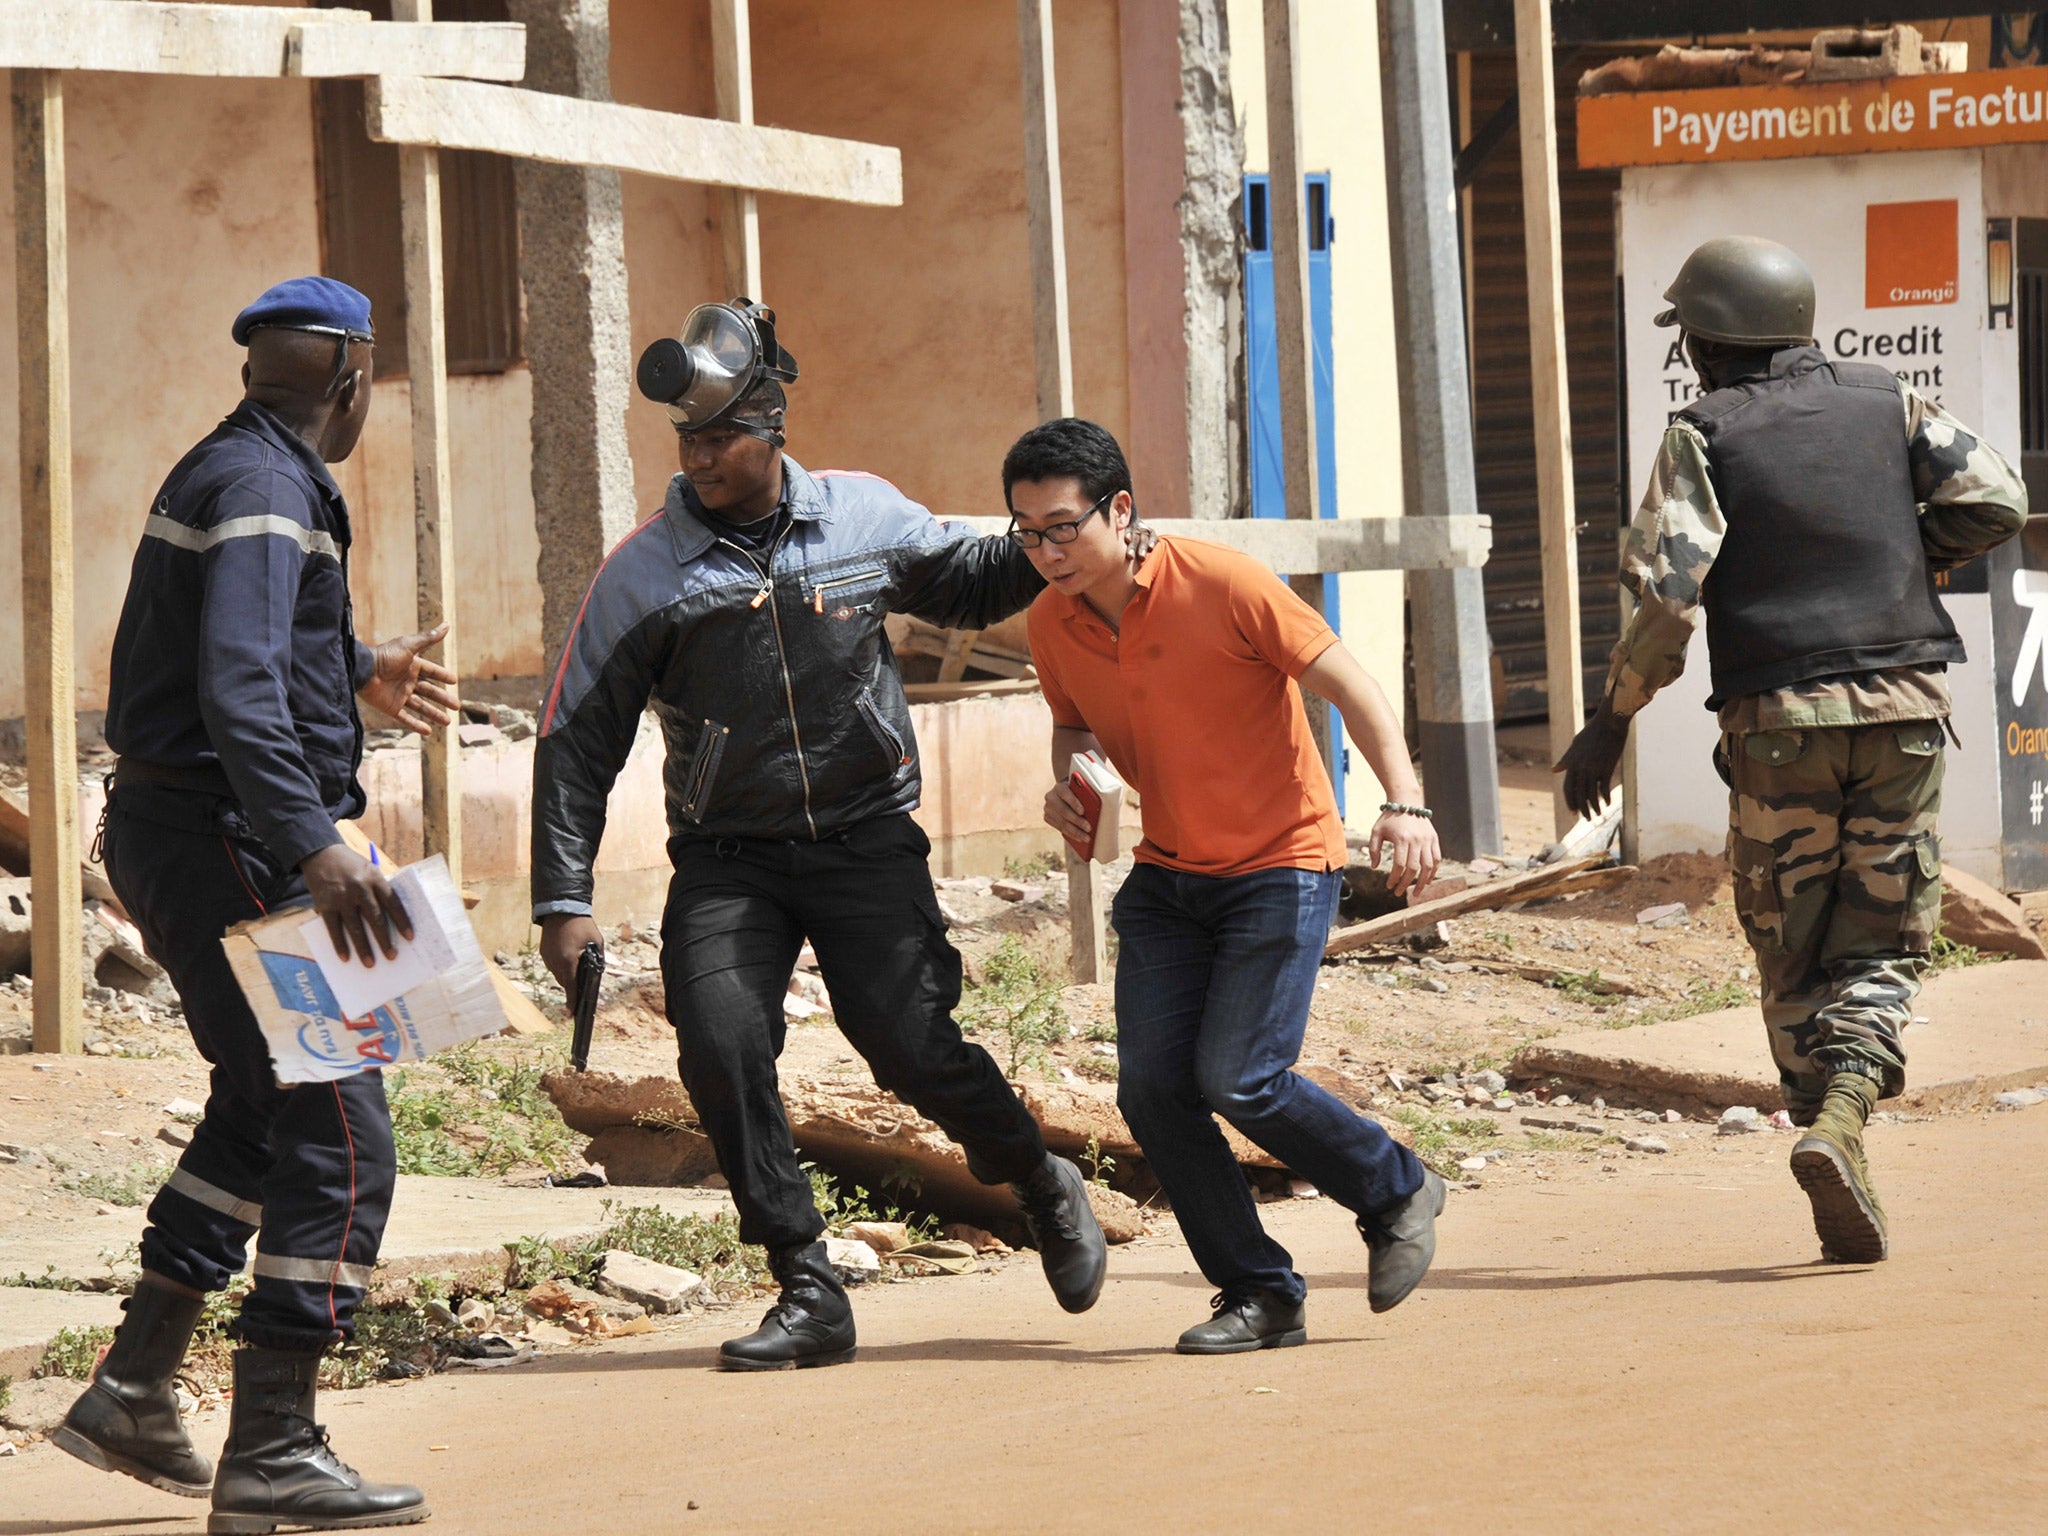 Malian security forces assist a man outside the Radisson Blu last November